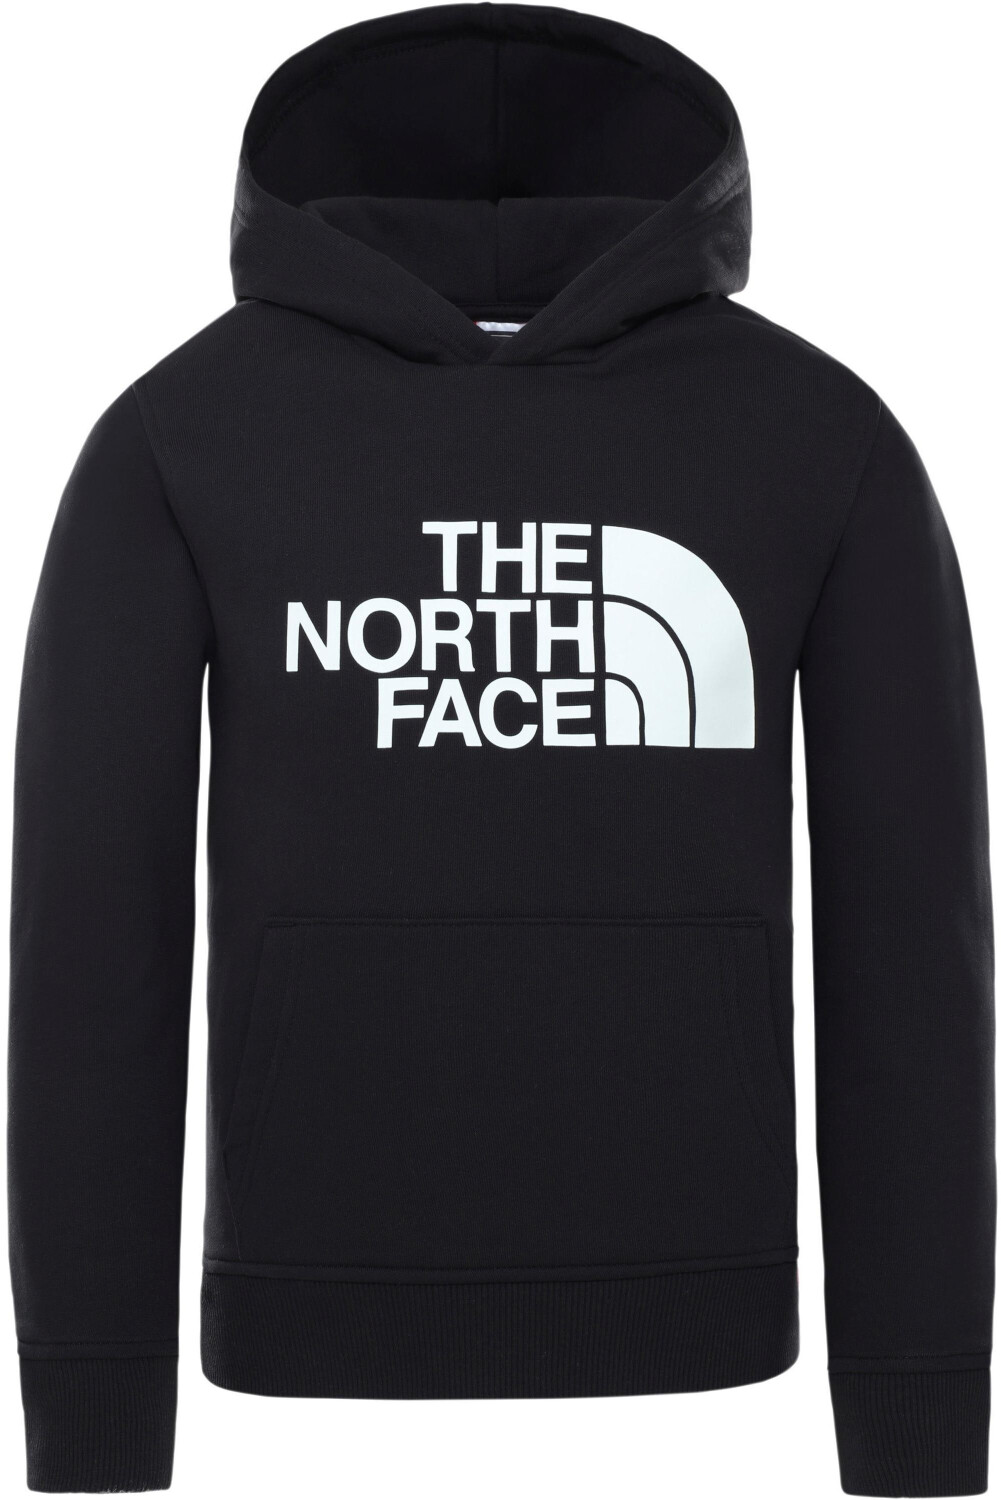 The North Face Youth Drew € ab Preisvergleich | 35,00 Peak bei Hoodie